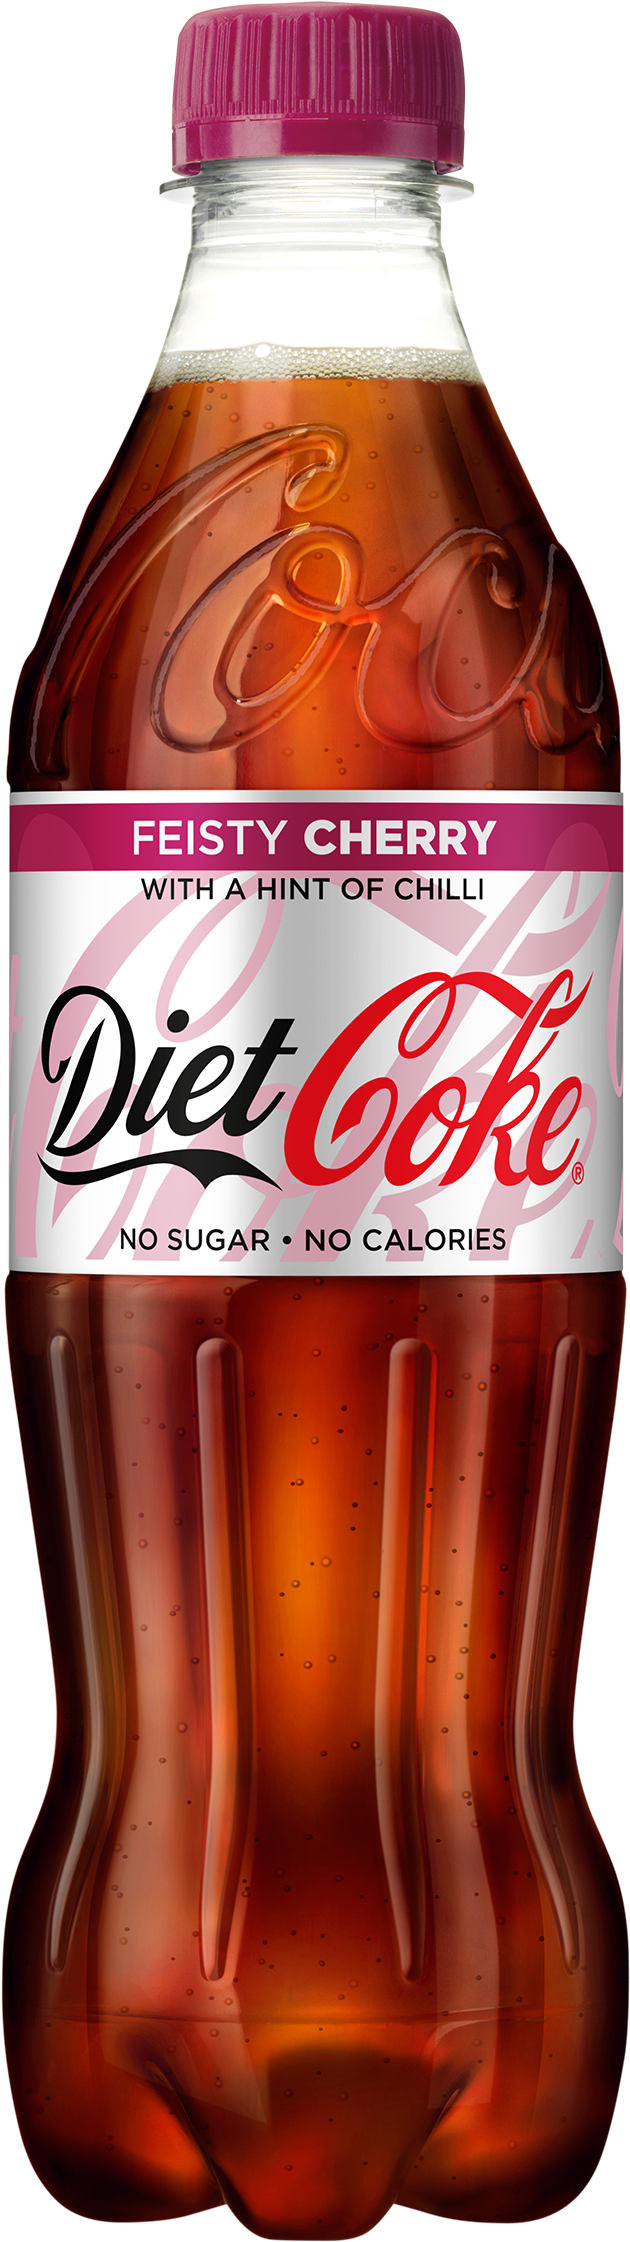 Diet Coke Feisty Cherry Flavor Bottle